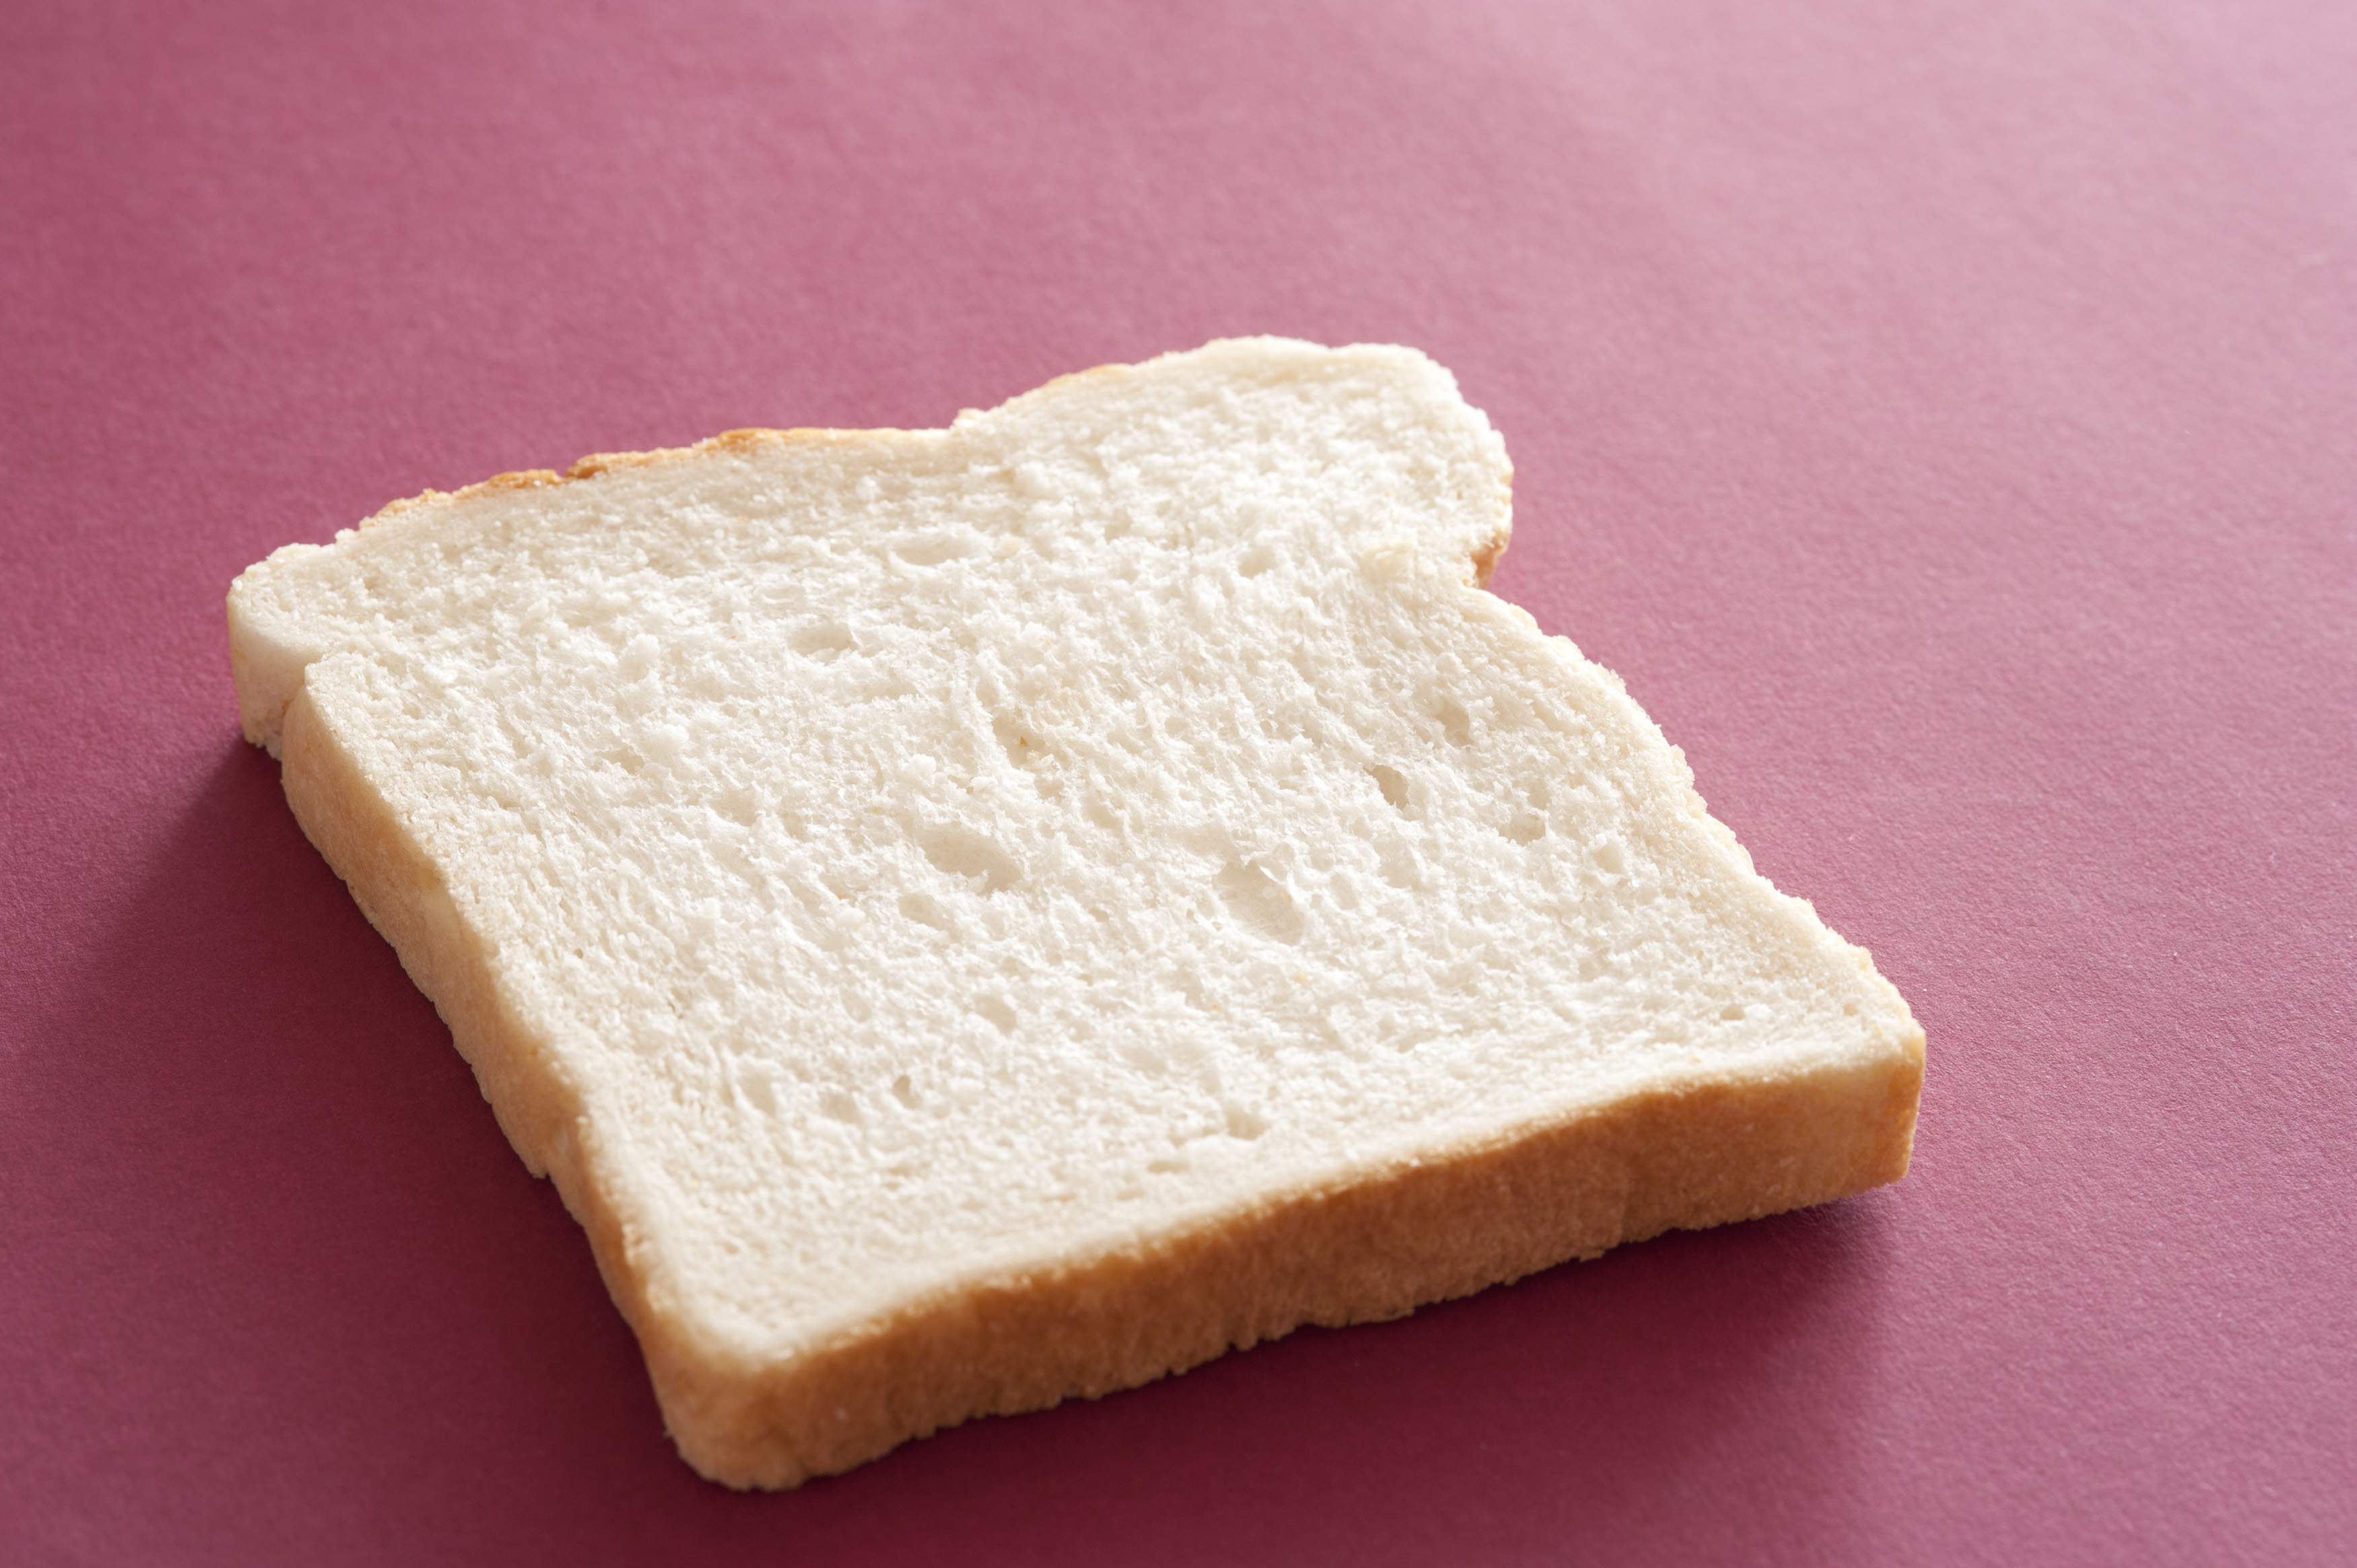 Slice of fresh white bread - Free Stock Image